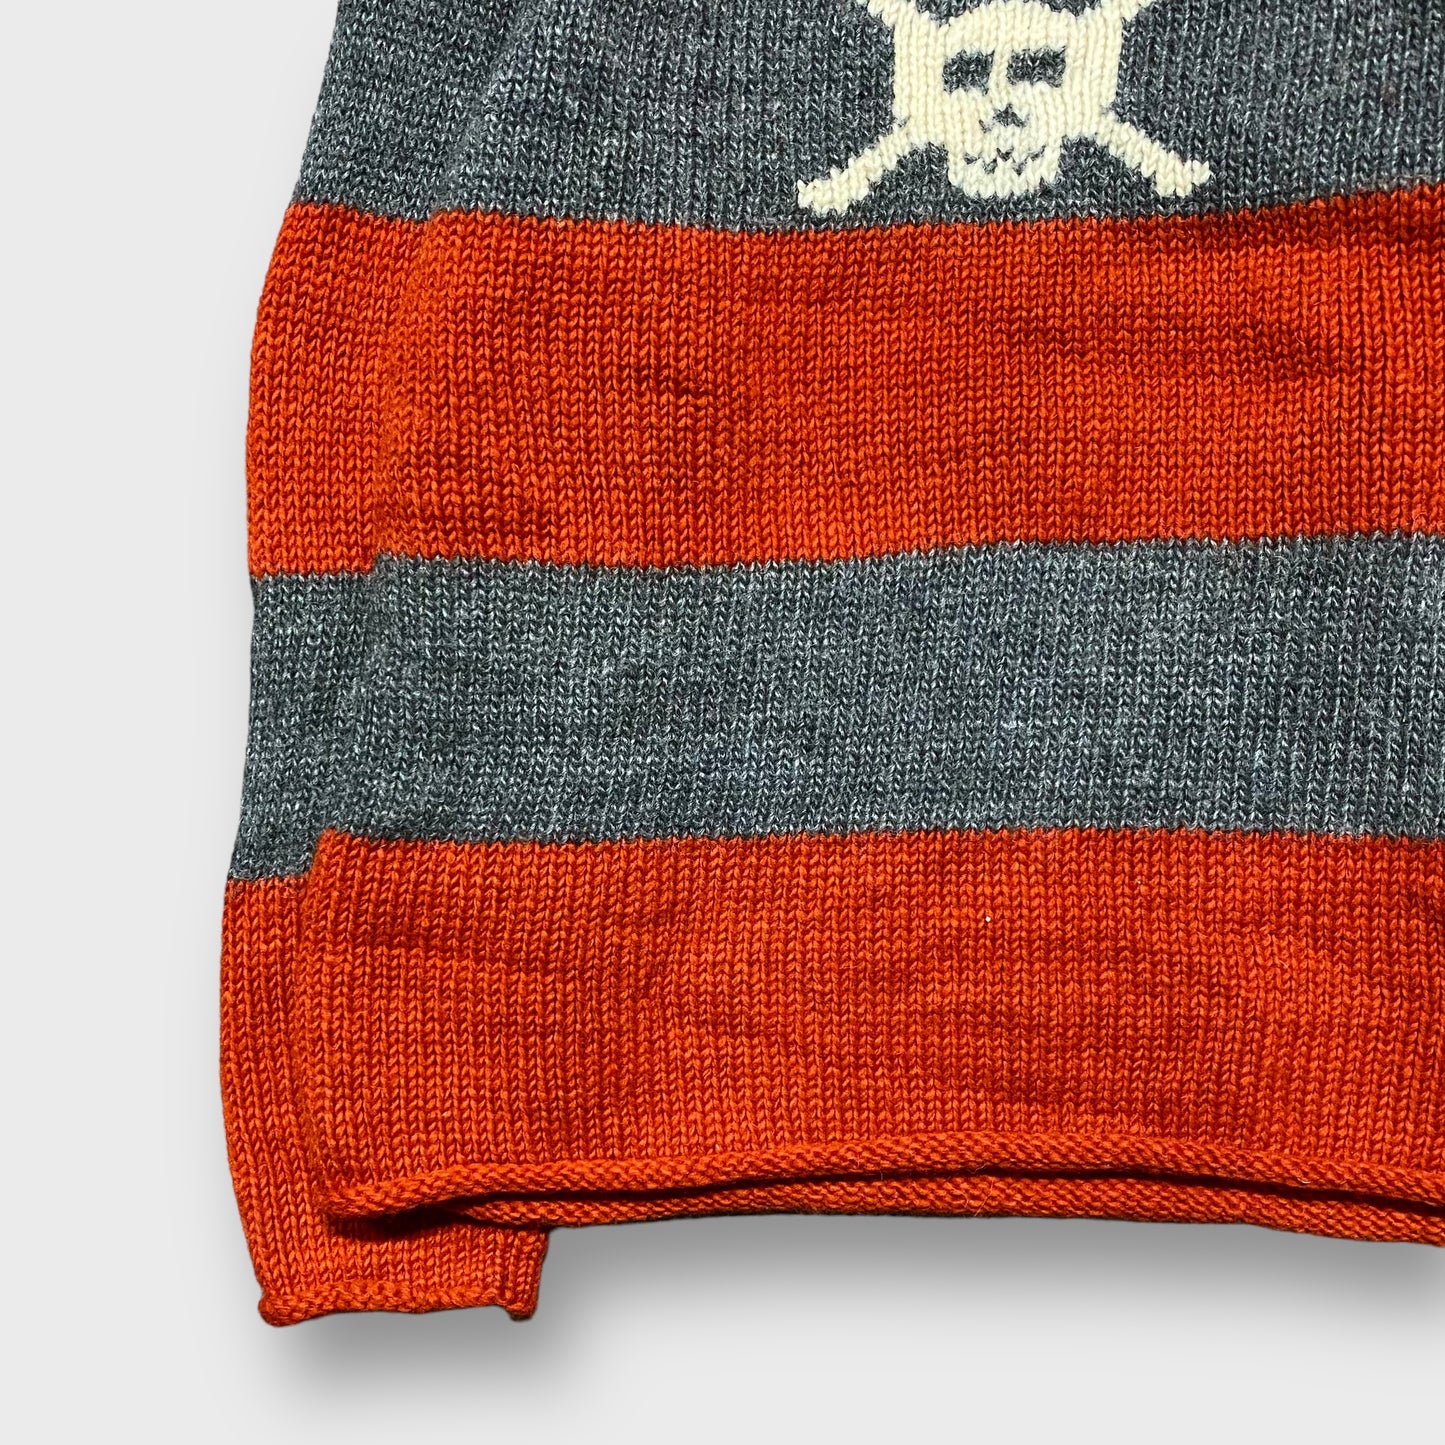 Skull design border knit sweater